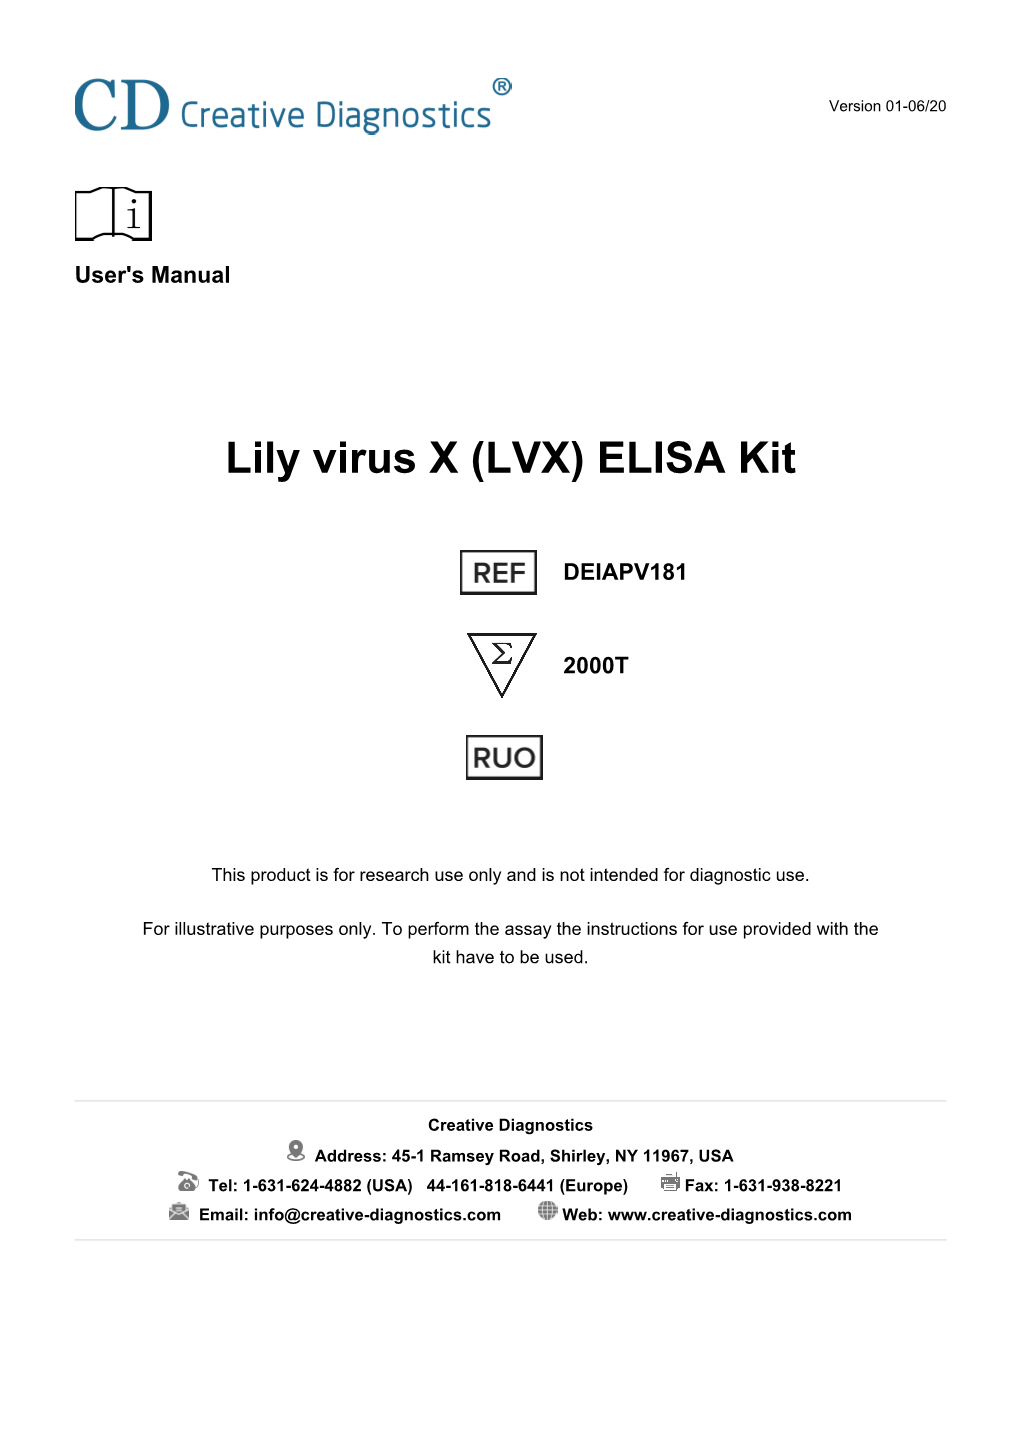 Lily Virus X (LVX) ELISA Kit